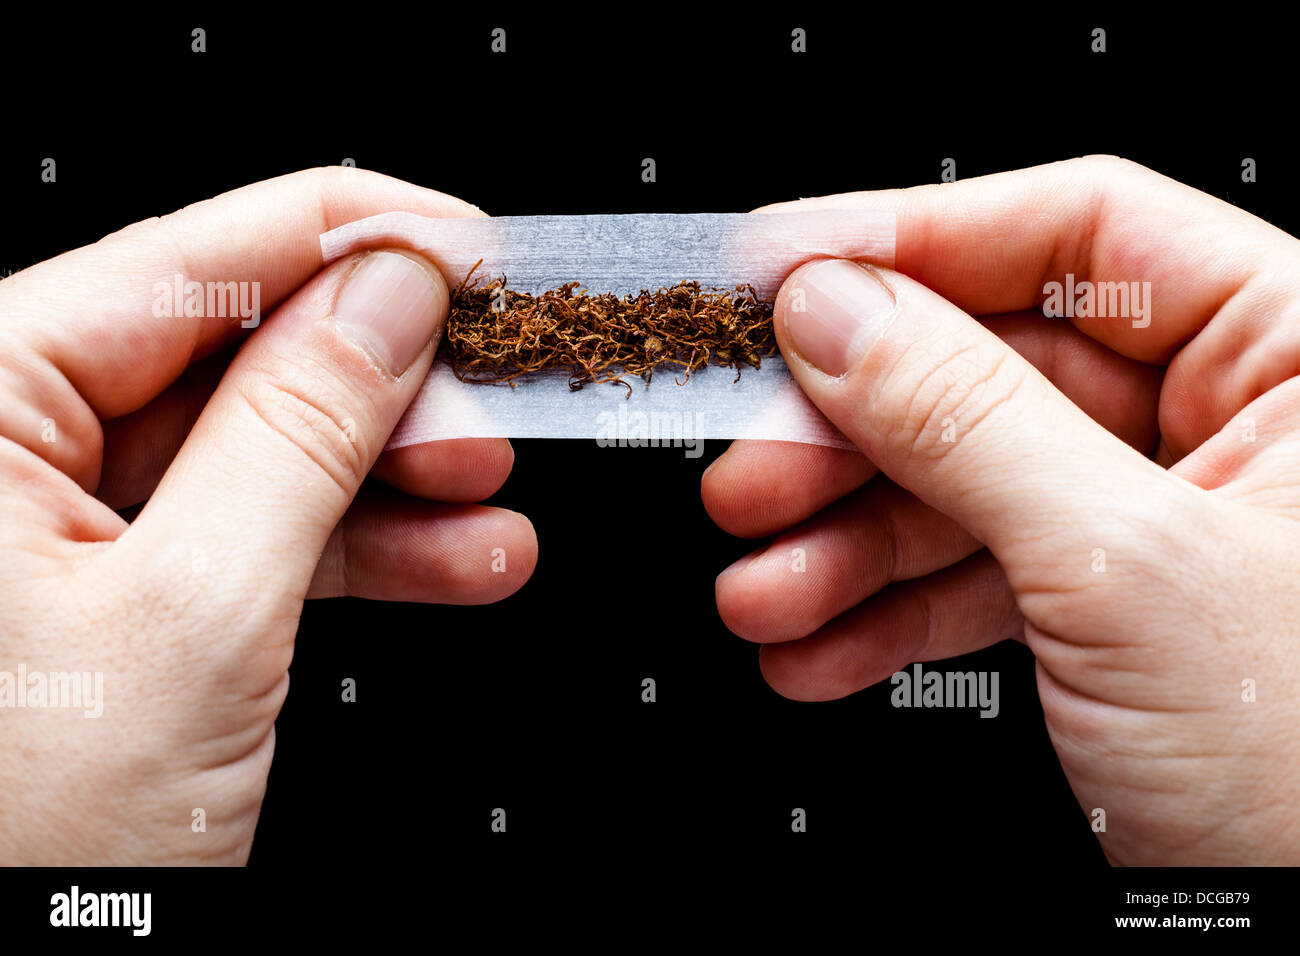 https://c8.alamy.com/comp/DCGB79/hands-rolling-a-cigarette-paper-with-tobacco-DCGB79.jpg